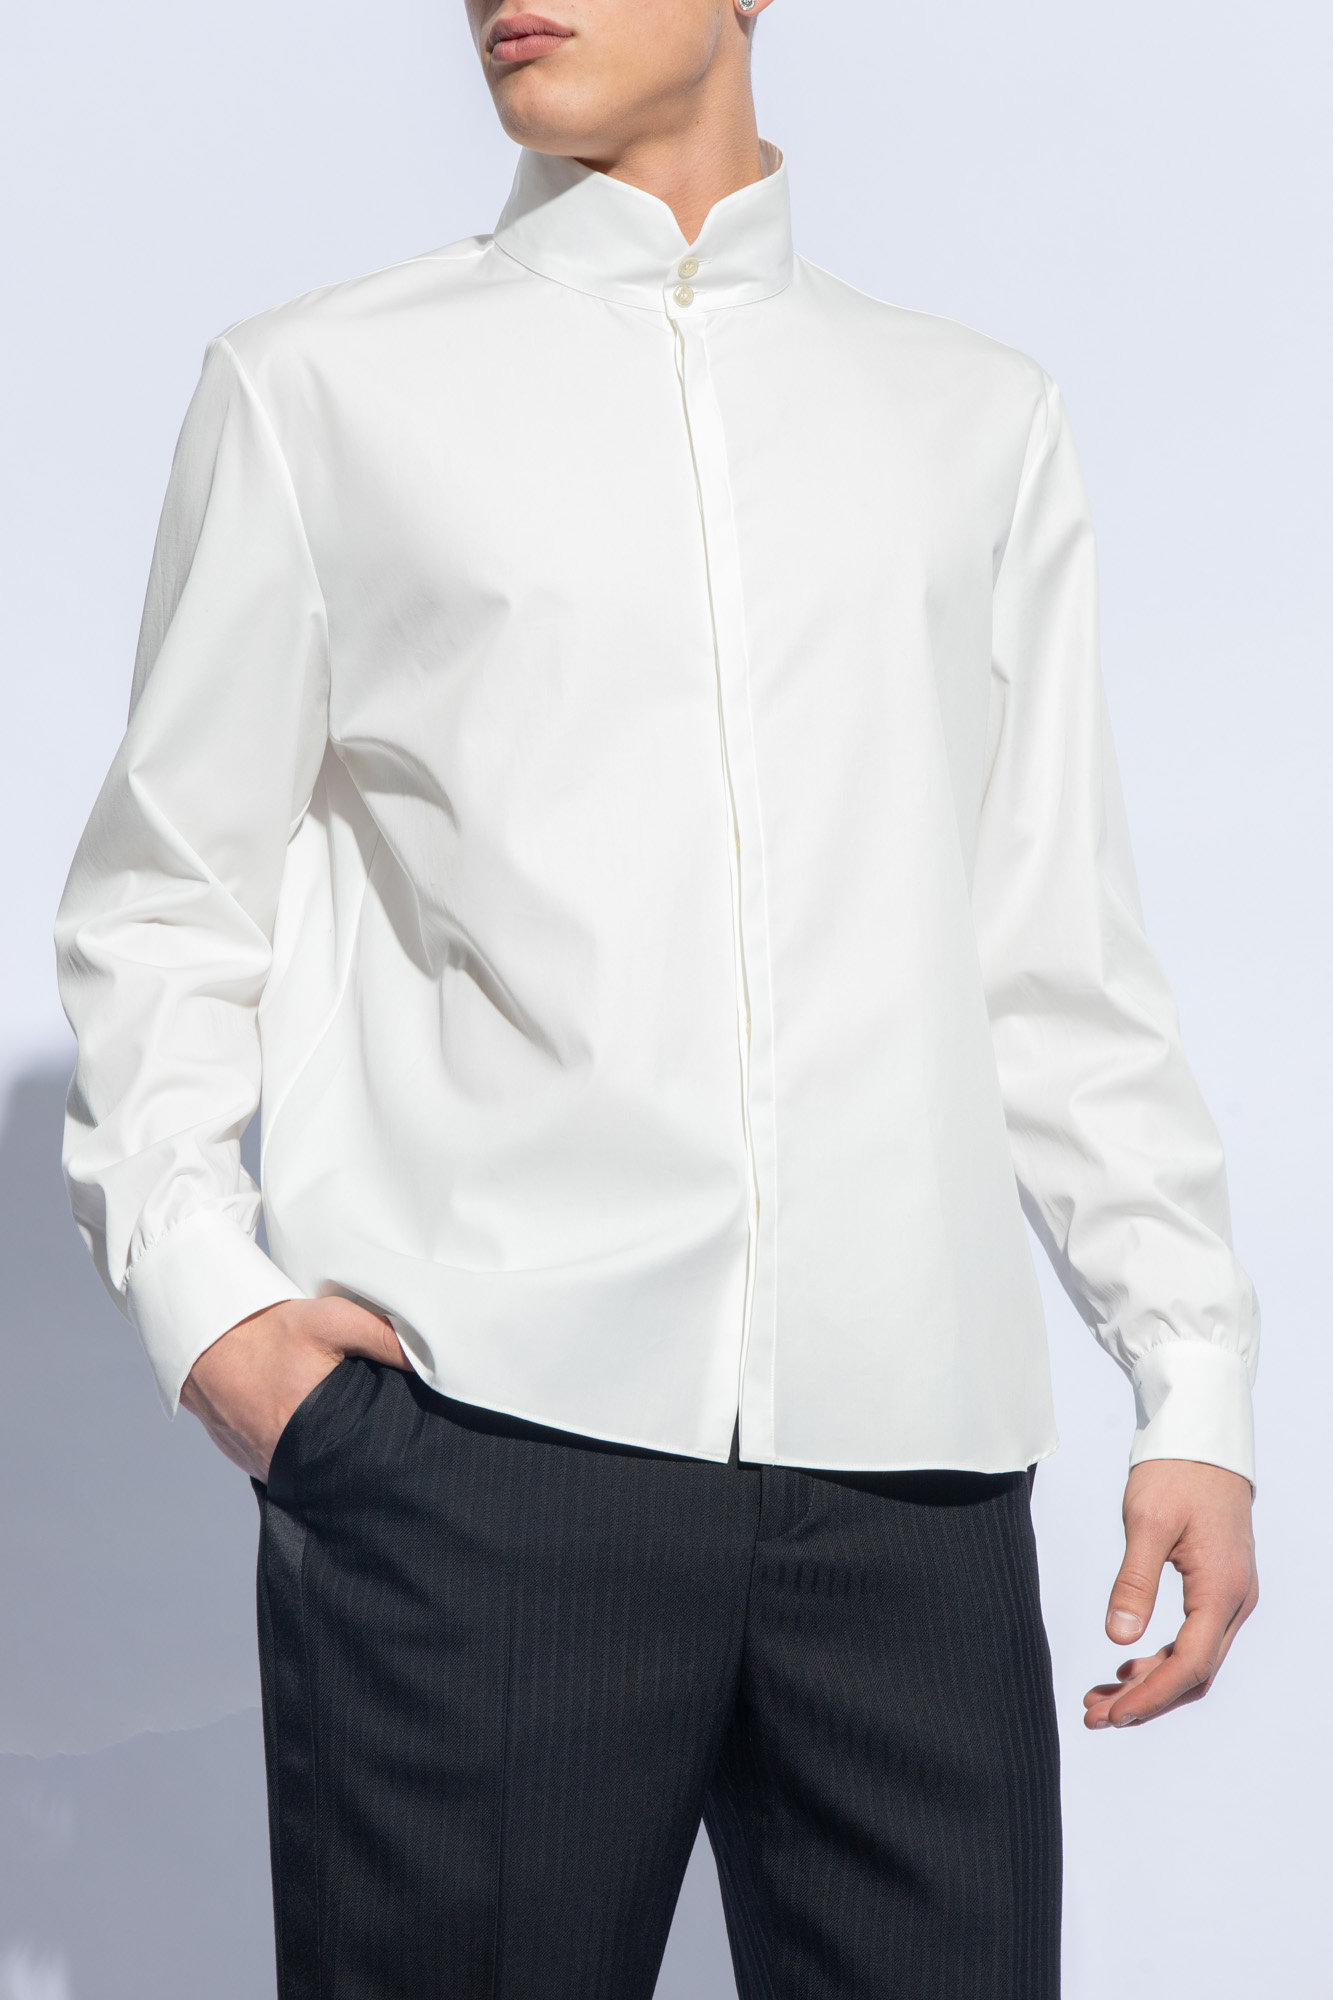 White Shirt with standing collar Saint Laurent - Vitkac Italy